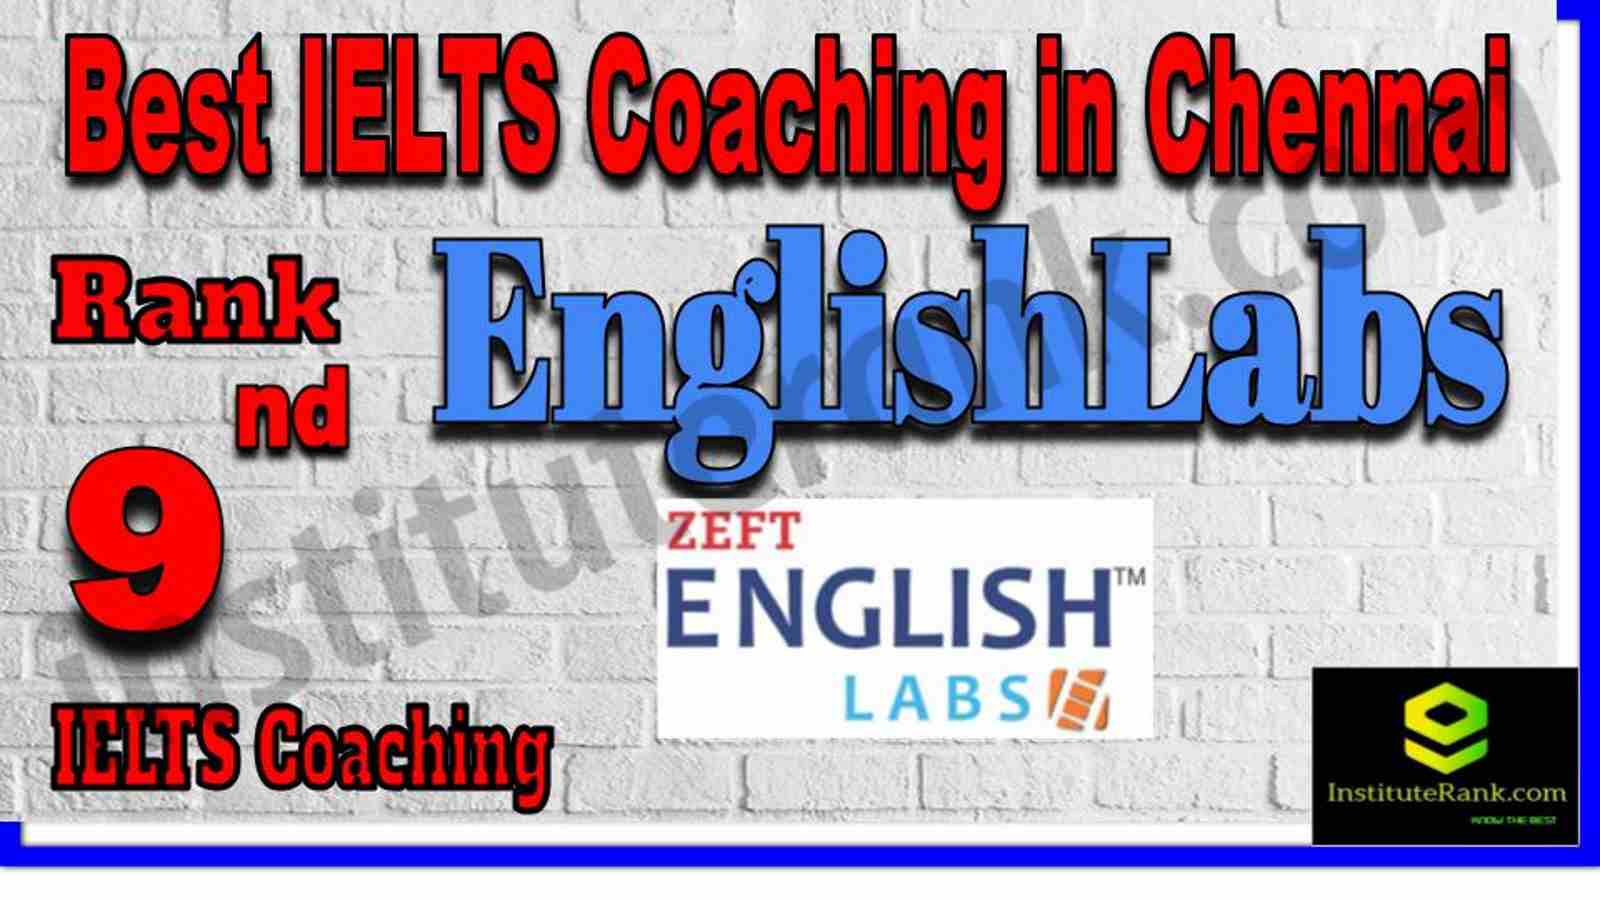 Rank 9. Best IELTS Coaching in Chennai